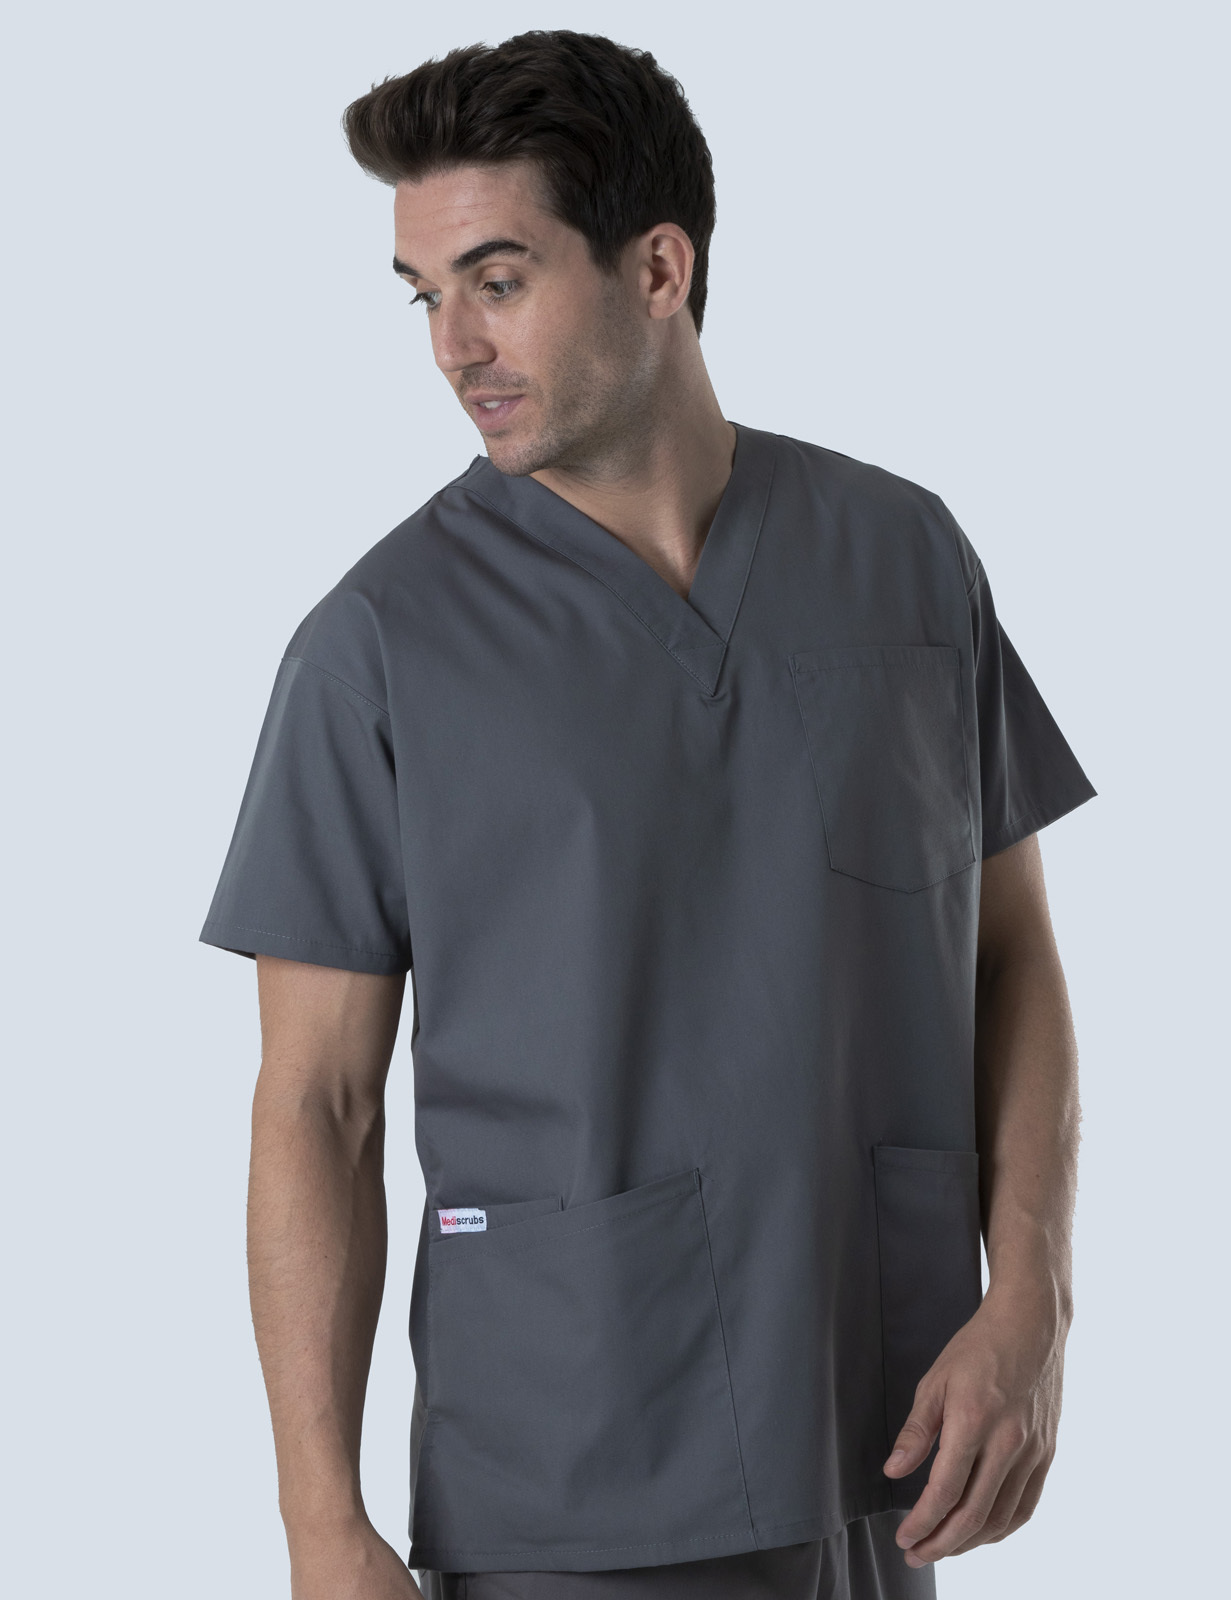 Rockhampton Base Hospital - ED RN (4 Pocket Scrub Top and Cargo Pants in Steel Grey incl Logos)